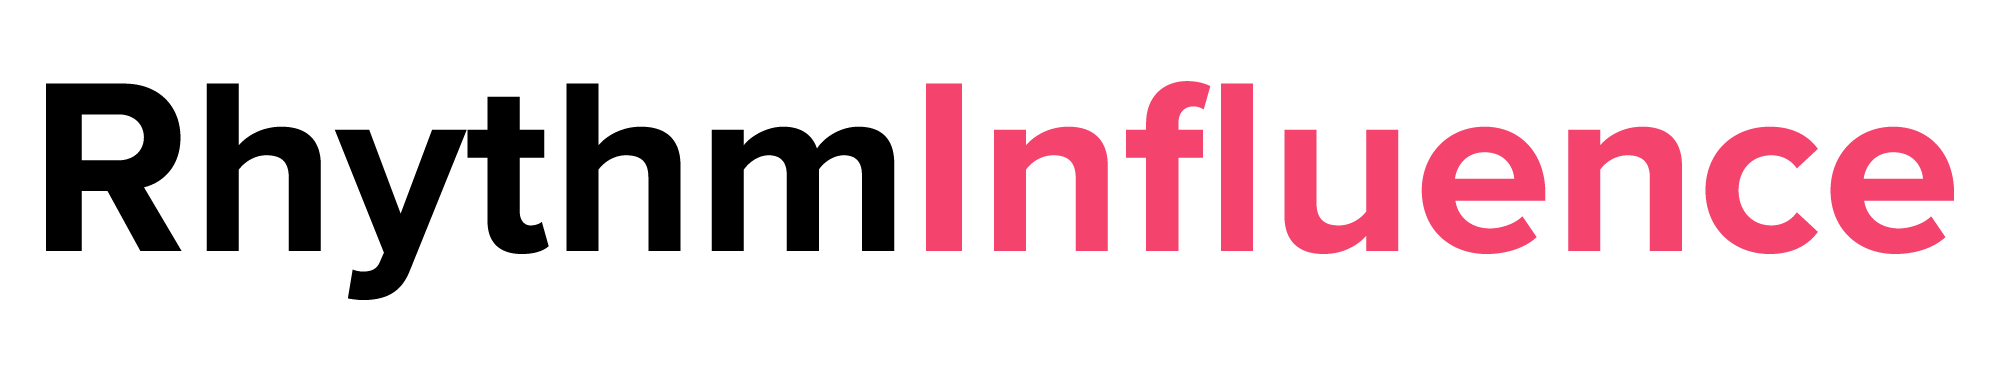 RhythmInfluence logo_2020 (1)